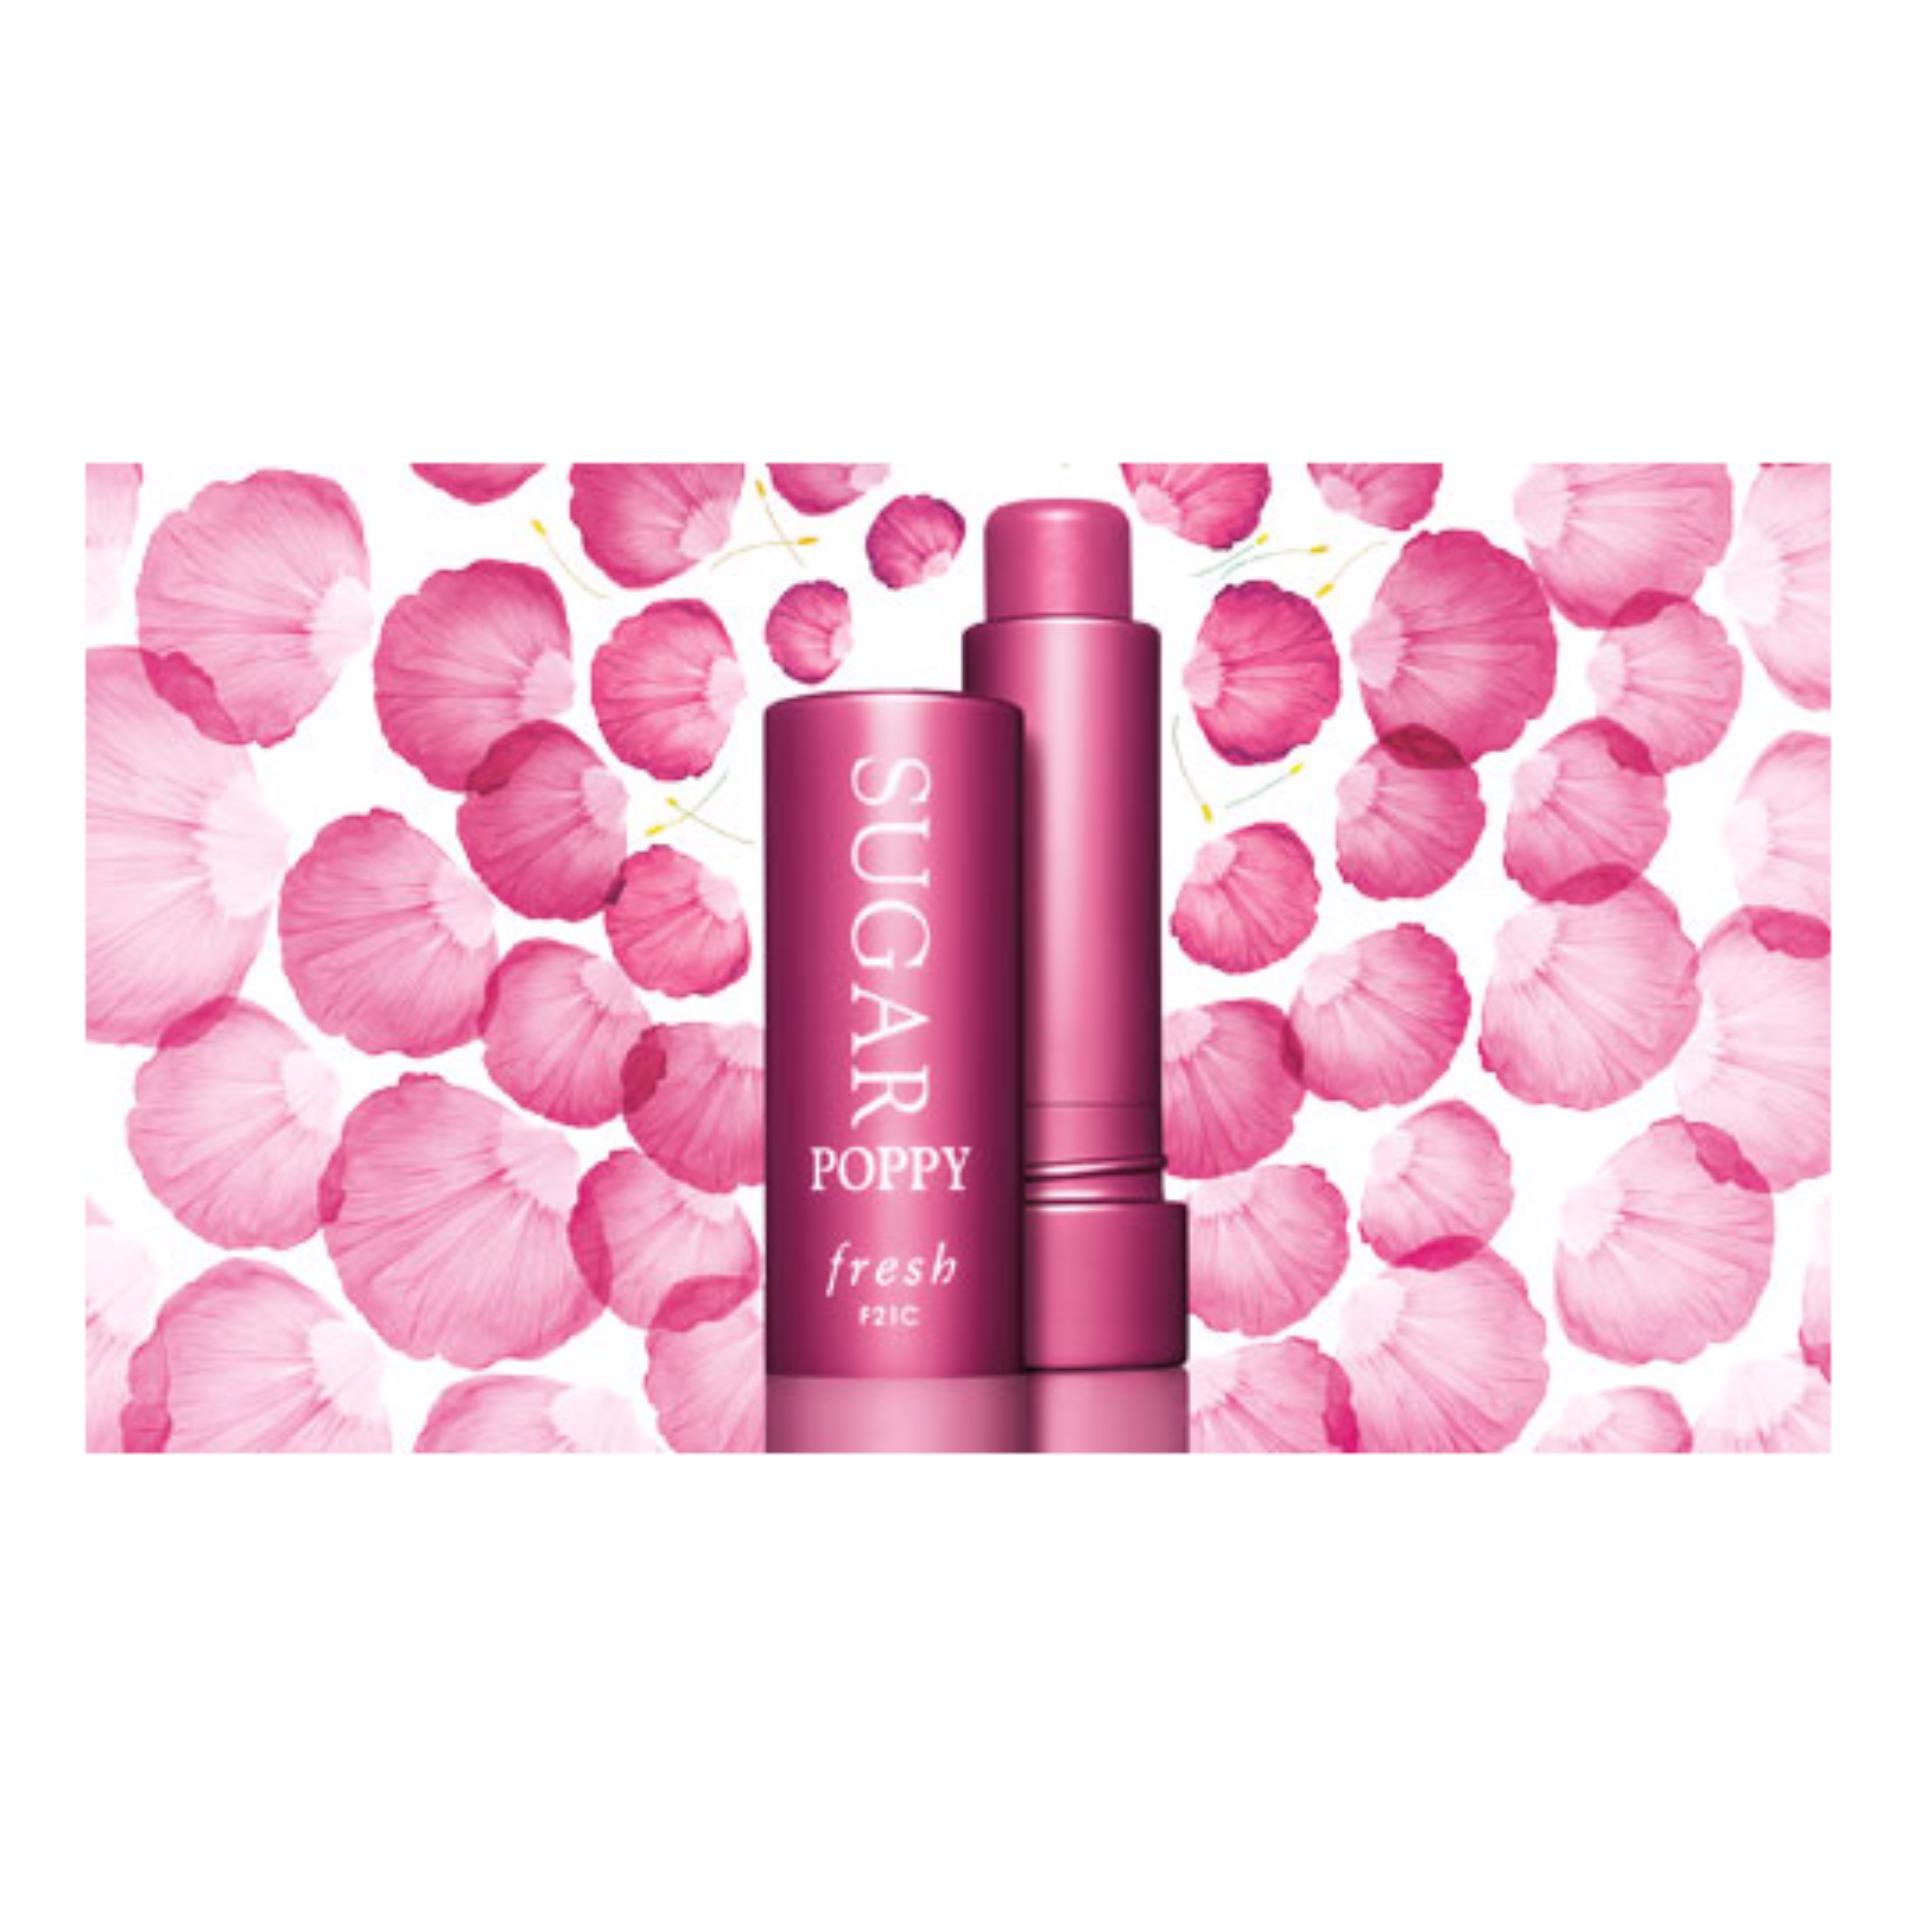 Fresh Sugar Tinted Lip Treatment Sunscreen SPF 15 - Poppy | eBay